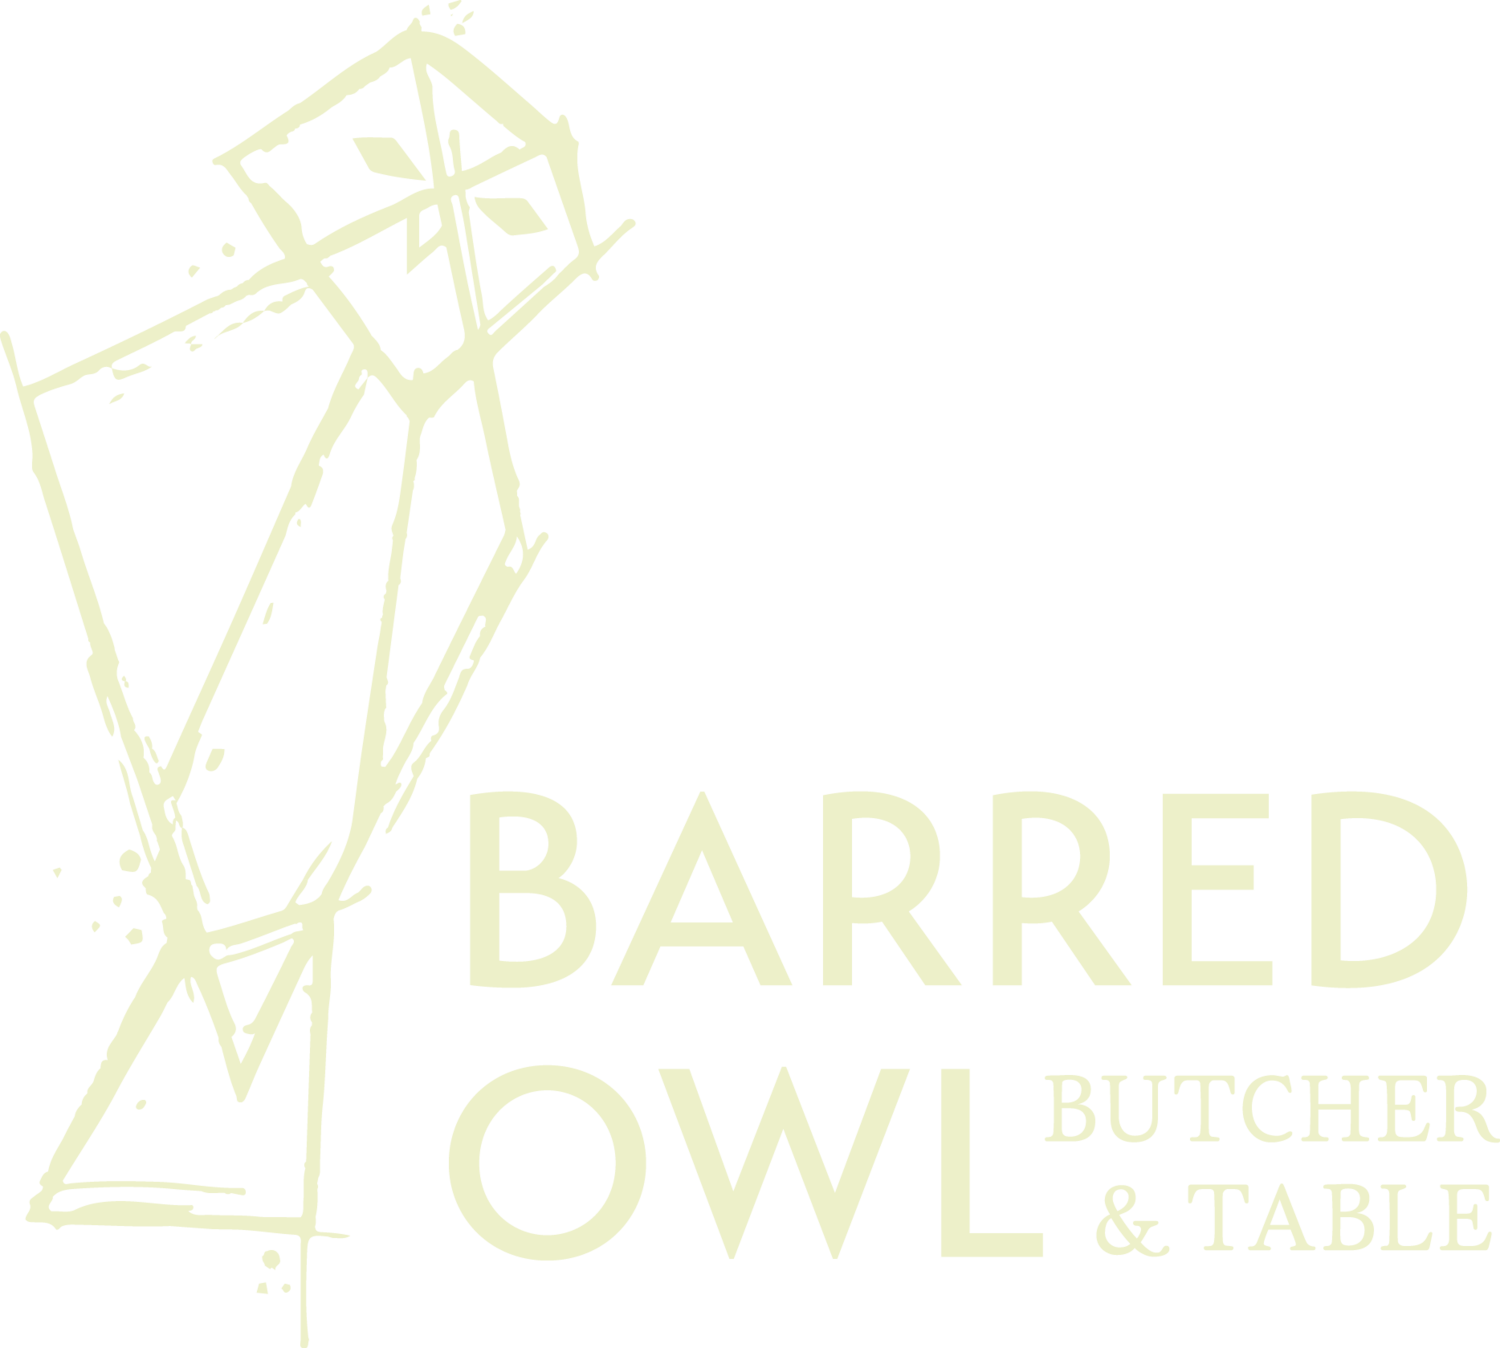 Barred Owl Butcher & Table